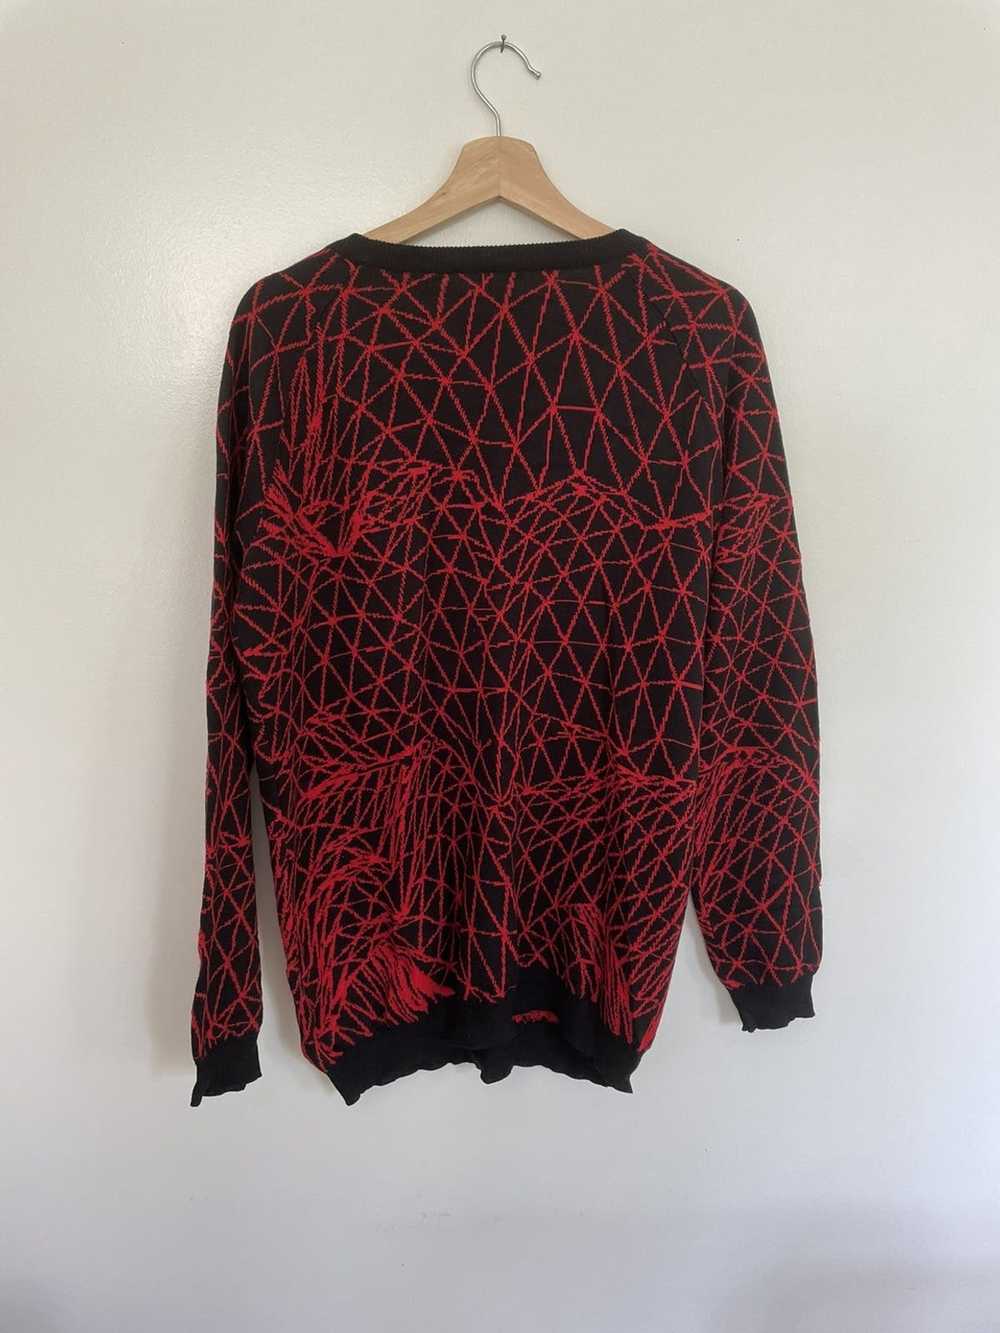 Christopher Kane Geometric sweater - image 3